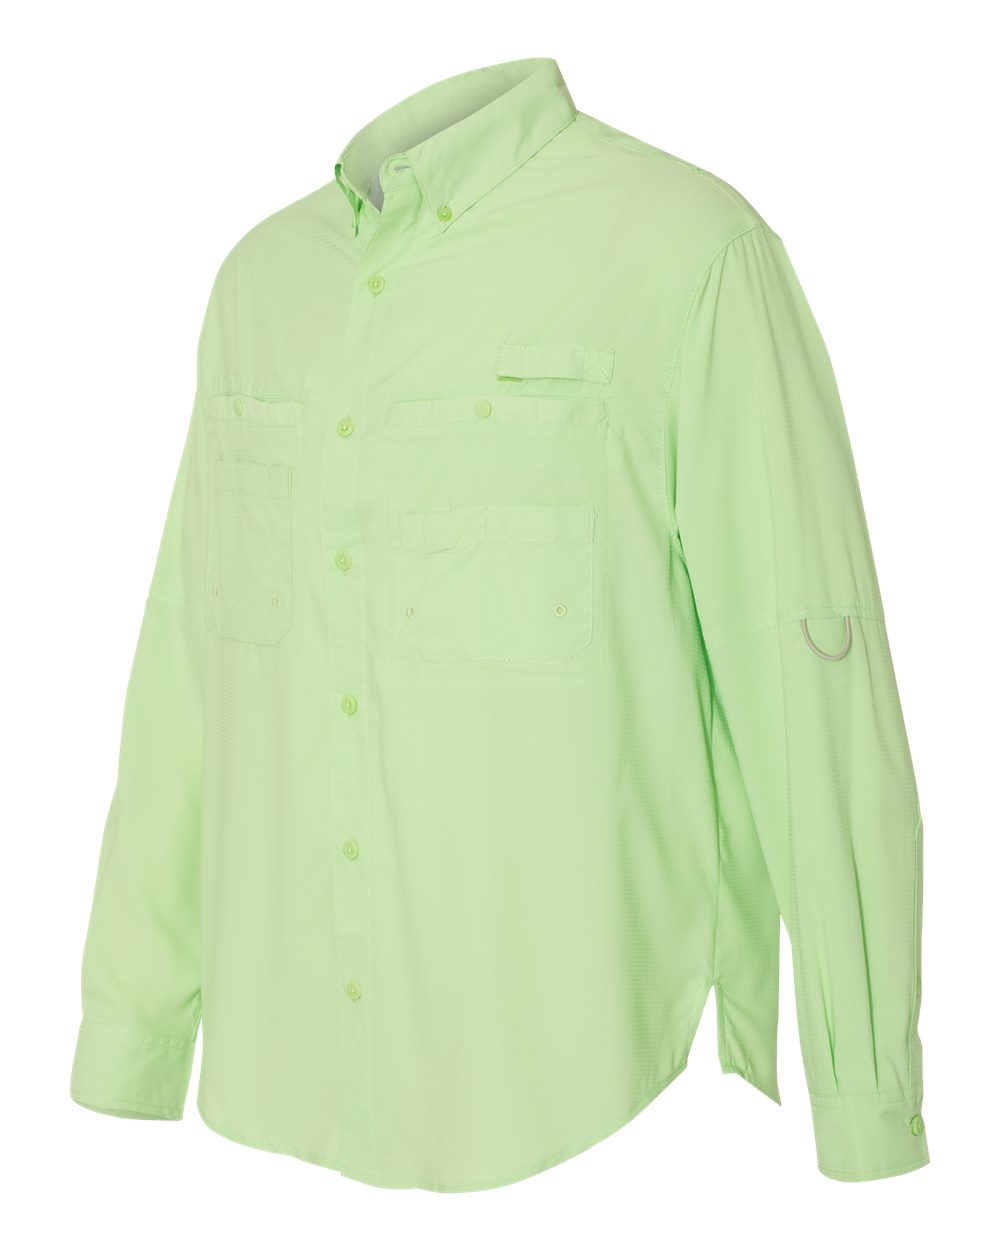 Hilton ZP2299 - Baja Long Sleeve Fishing Shirt $31.37